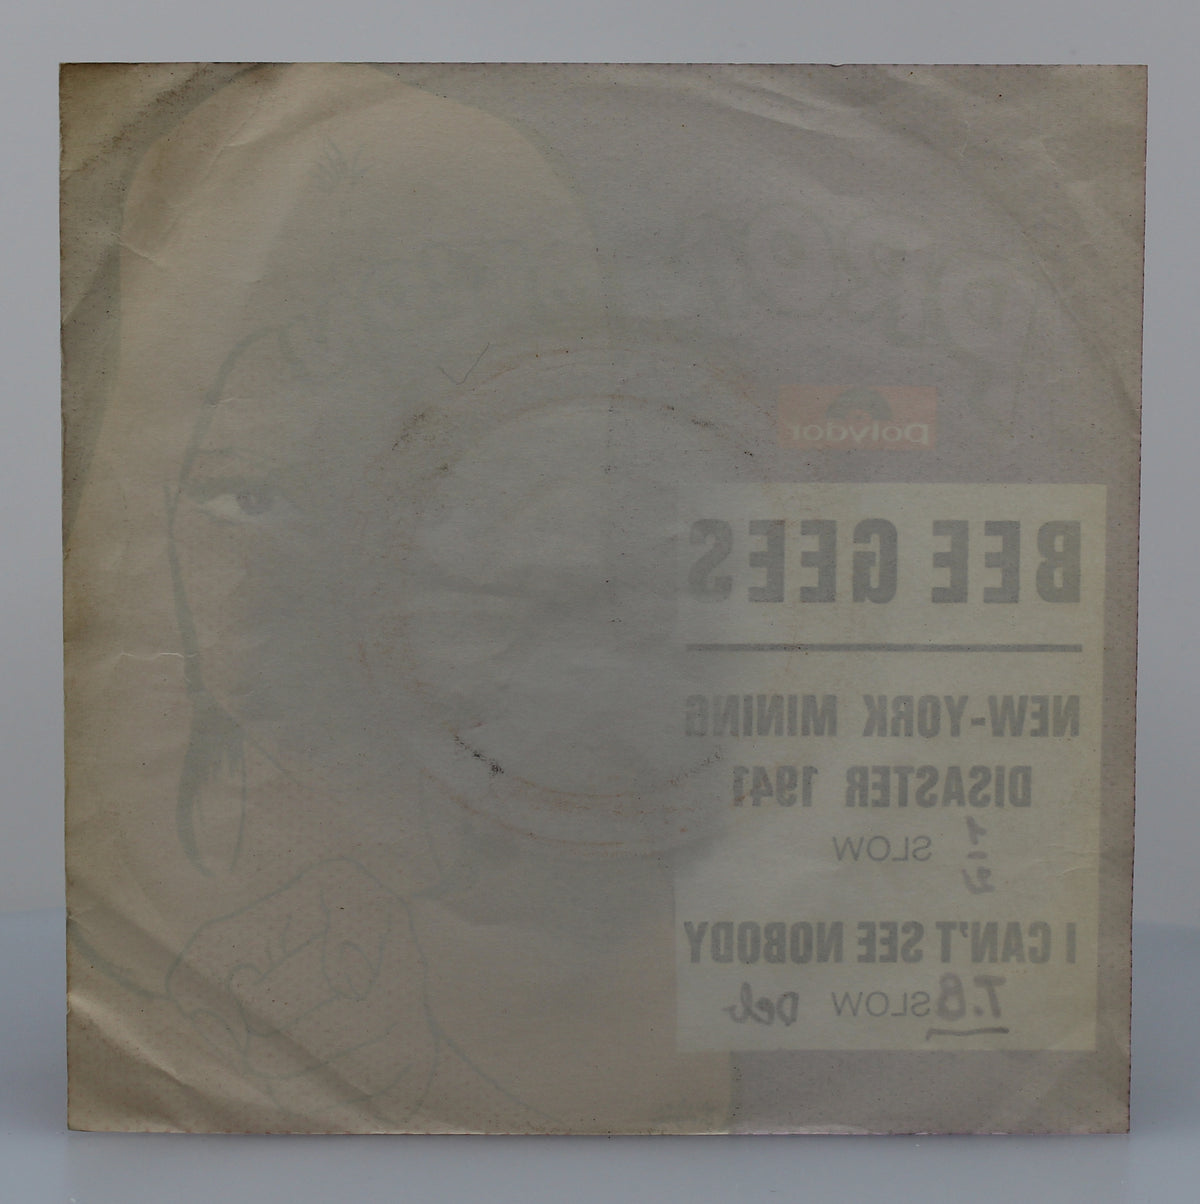 Bee Gees, Vinyl Single, New York Mining Disaster, France (1086)